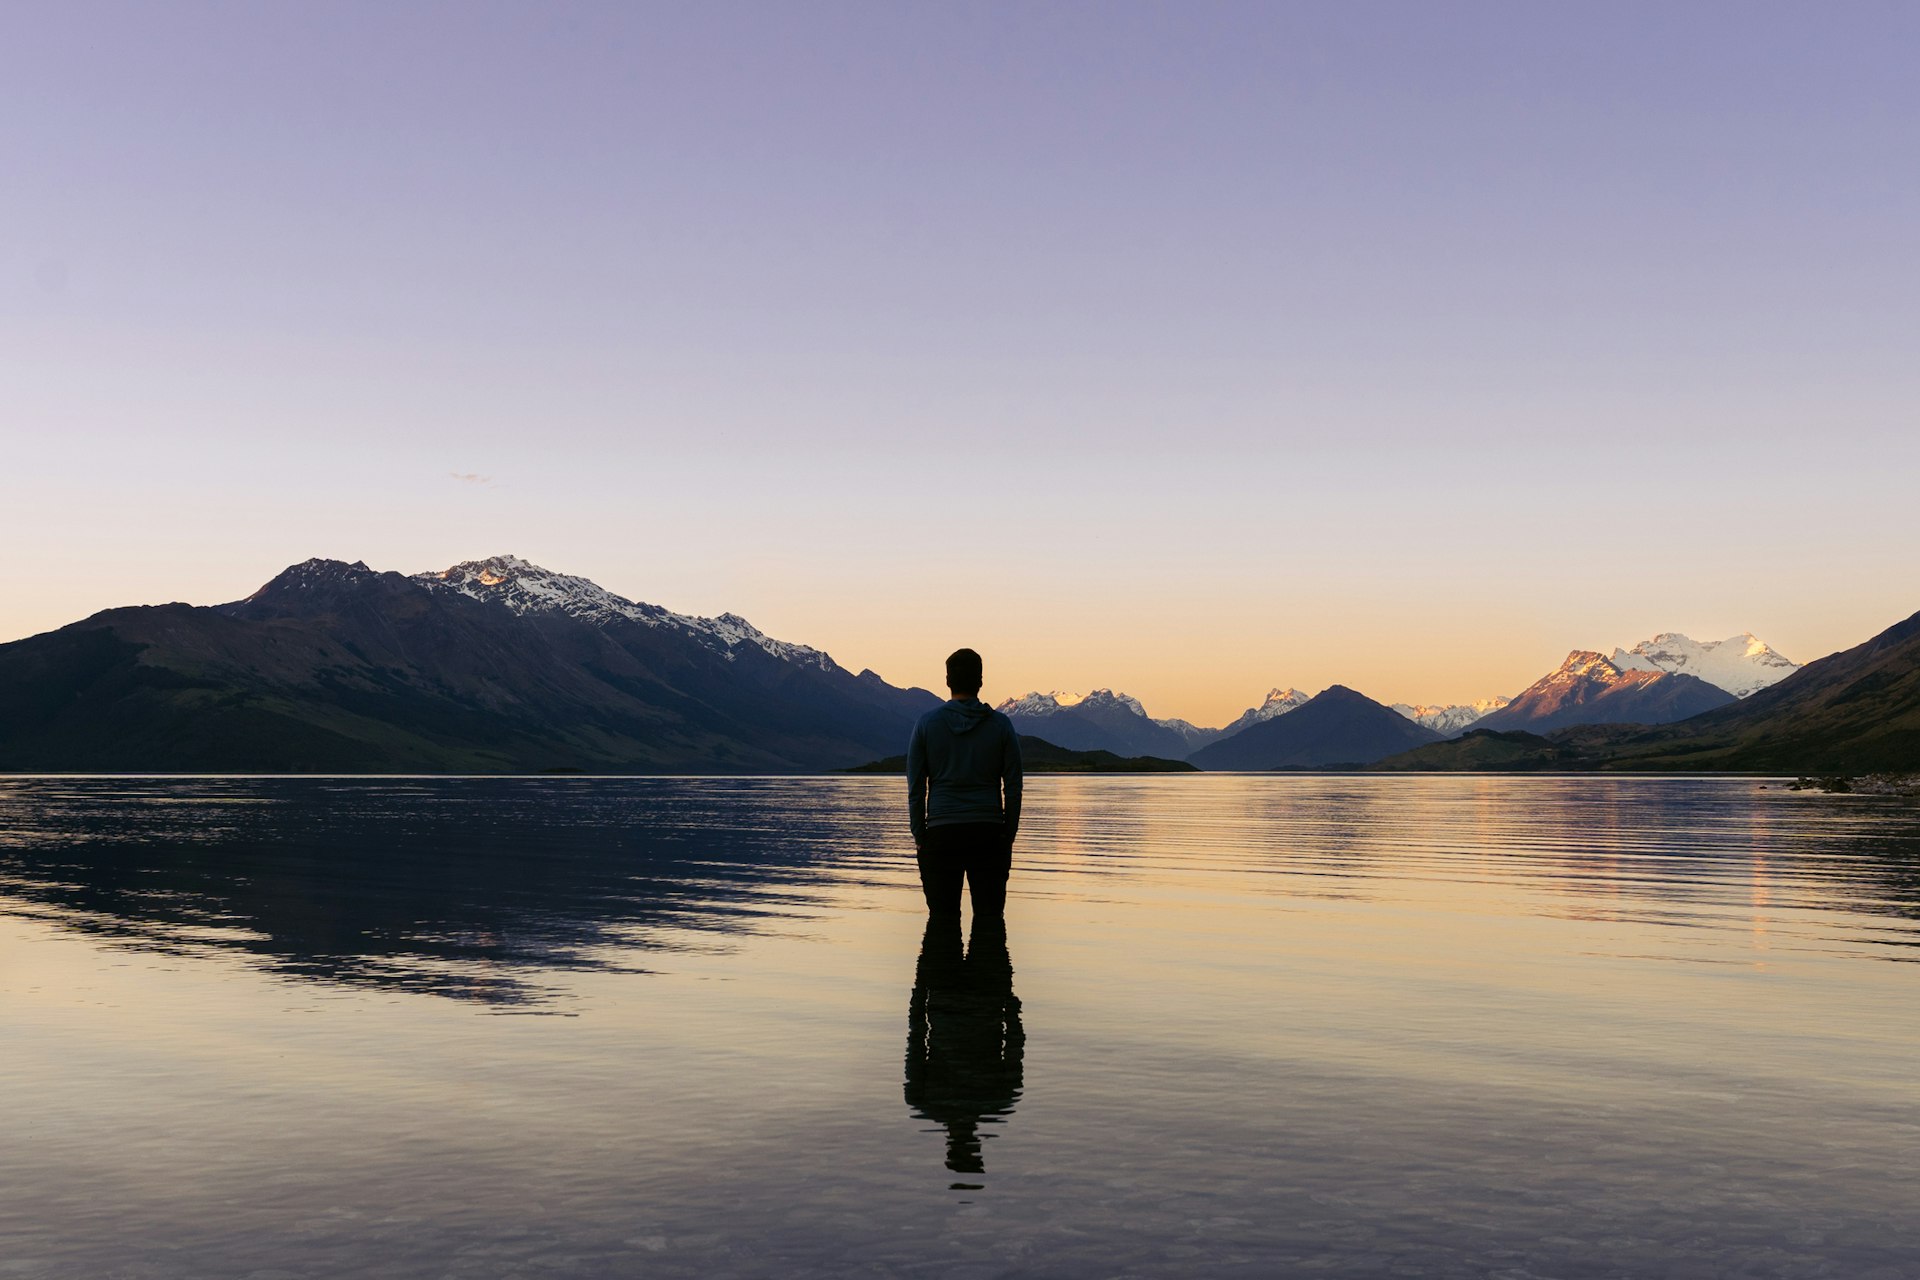 Man inside Lake Wakatipu looking at the amazing sunset behind snowy mountain peaks. New Zealand landscape